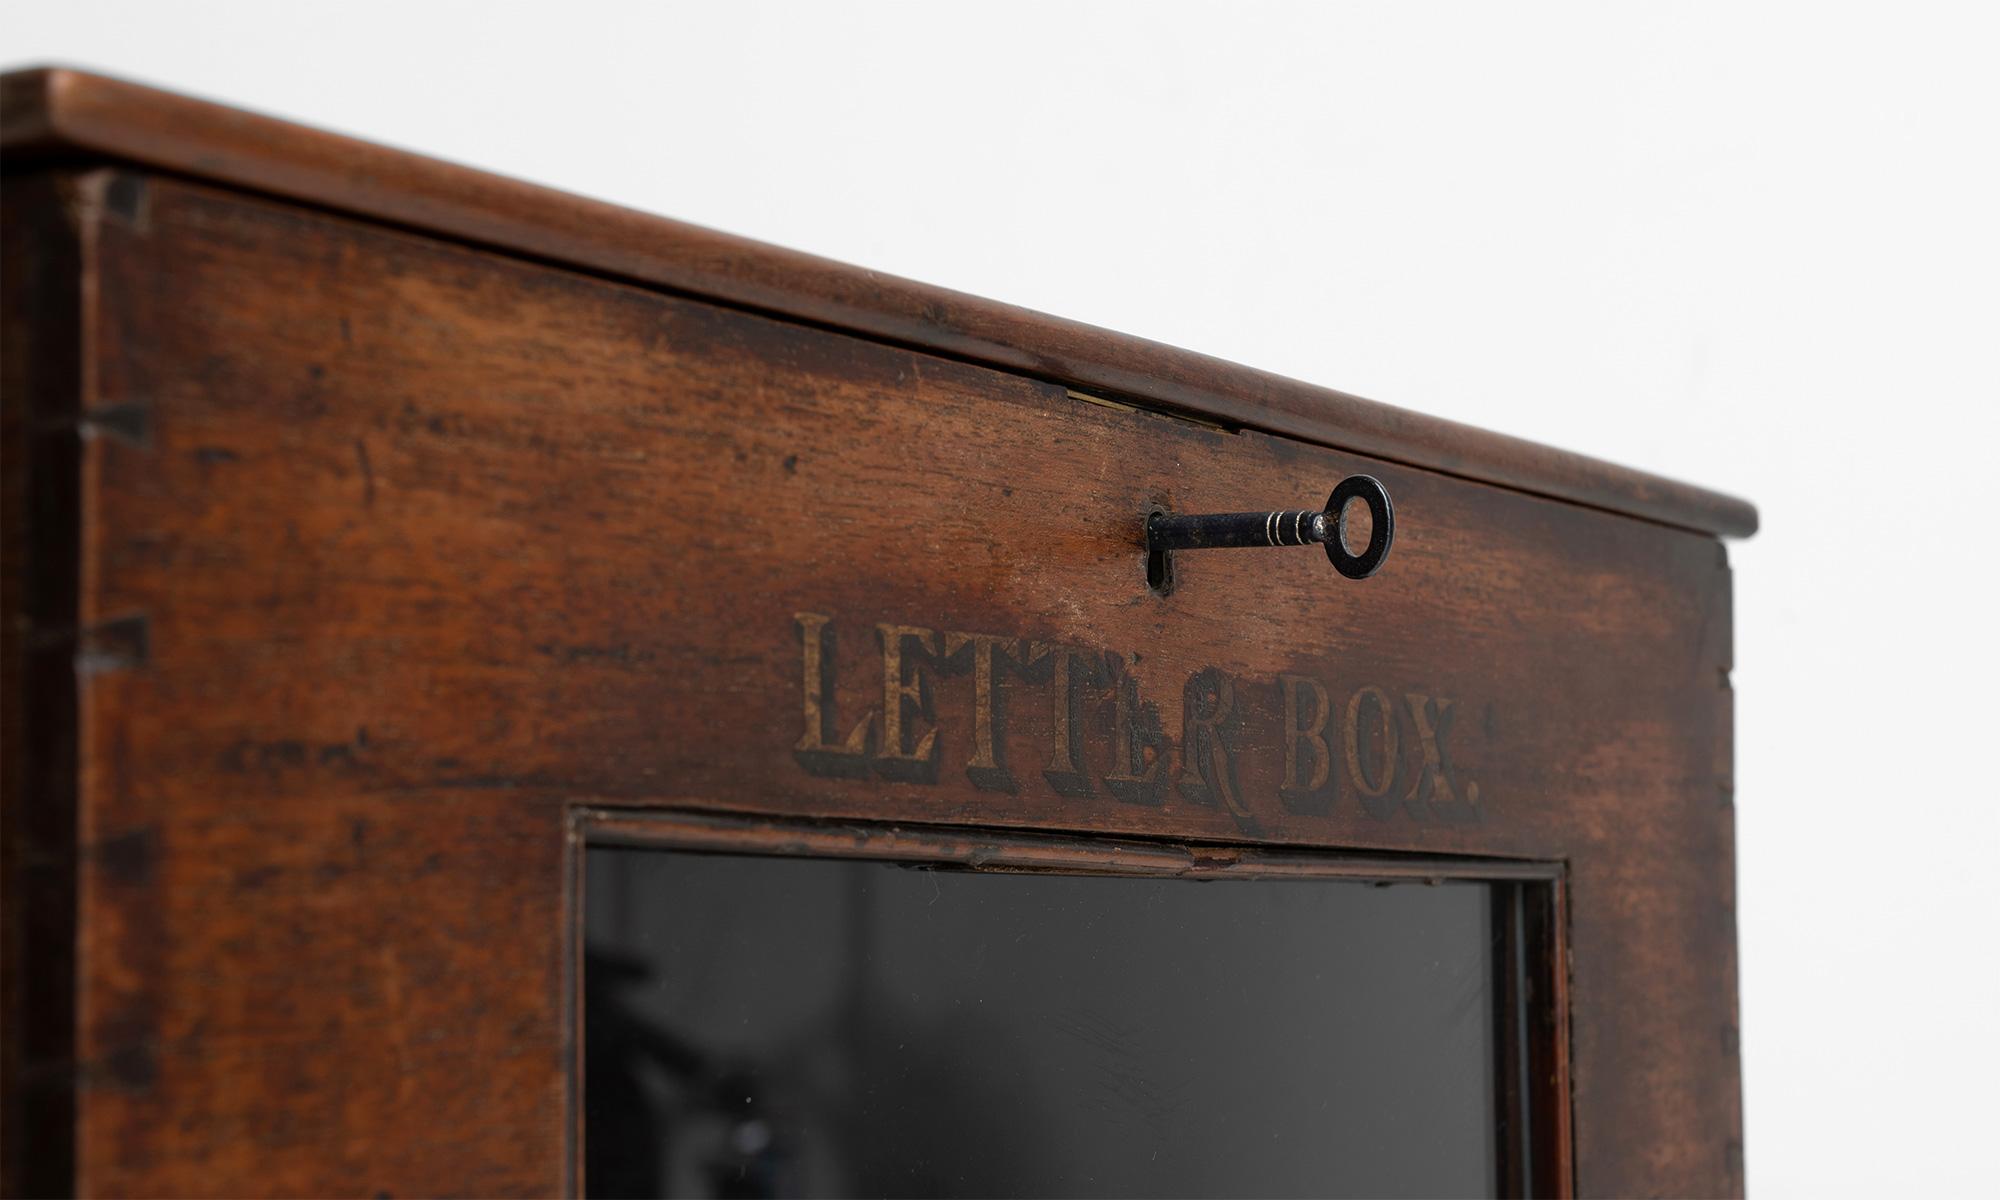 English Country House Letter Box, England, circa 1870